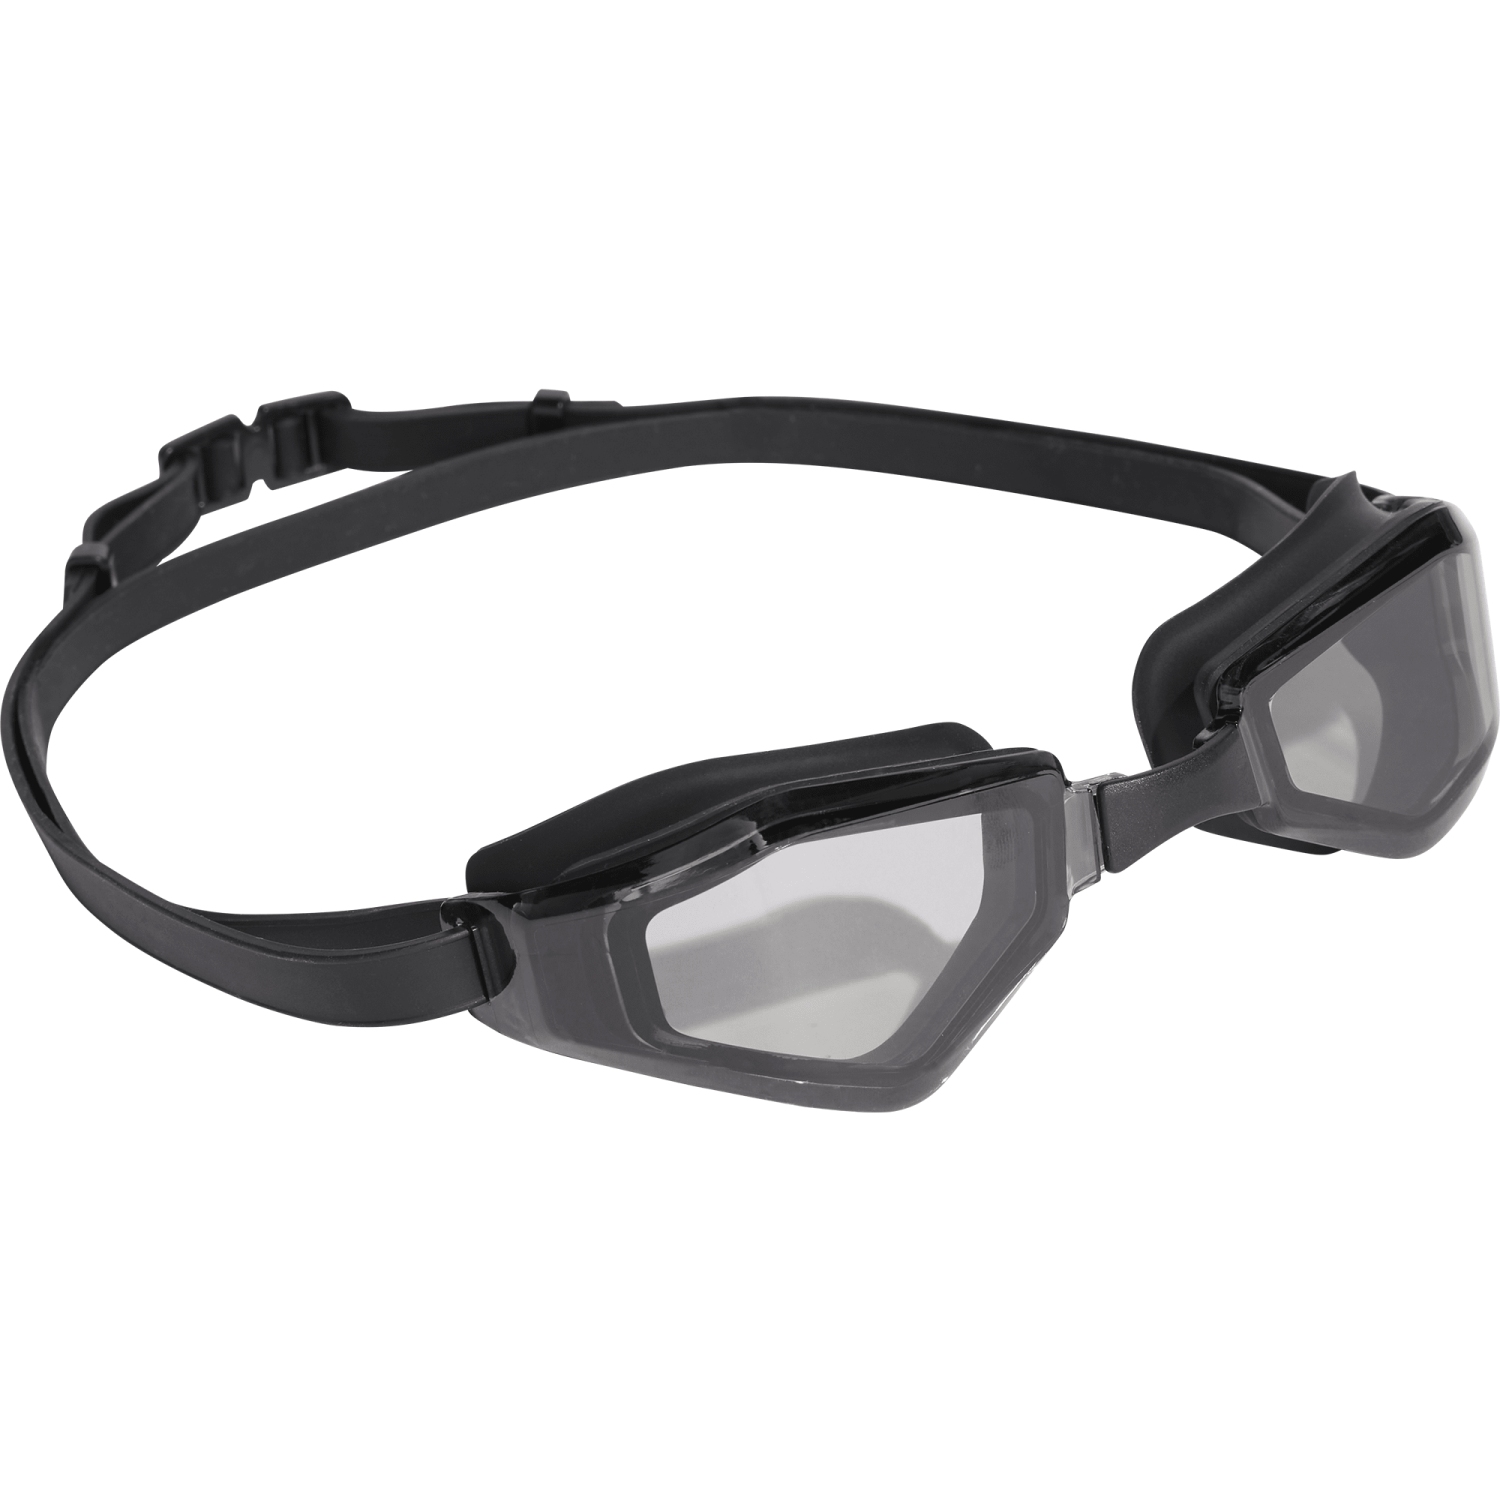 Productfoto van adidas Ripstream Select Zwembril - black/carbon IK9660 - smoke lenses